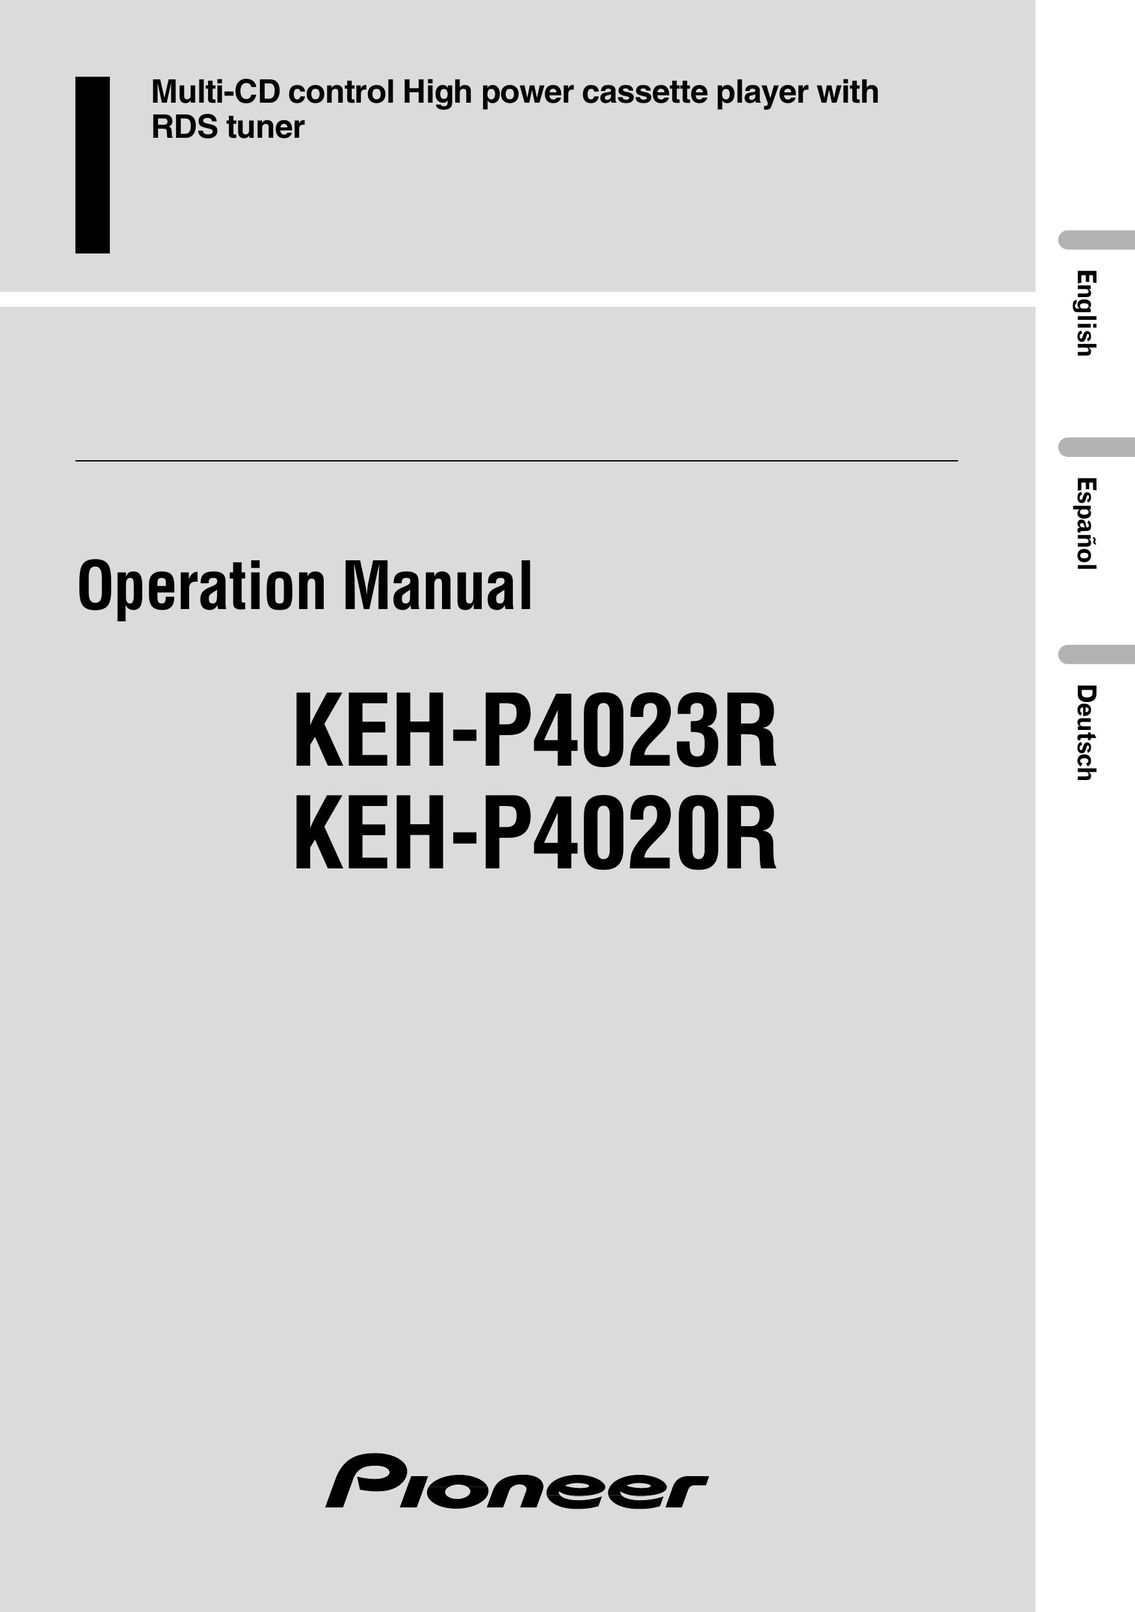 Pioneer KEH-P4023R Cassette Player User Manual